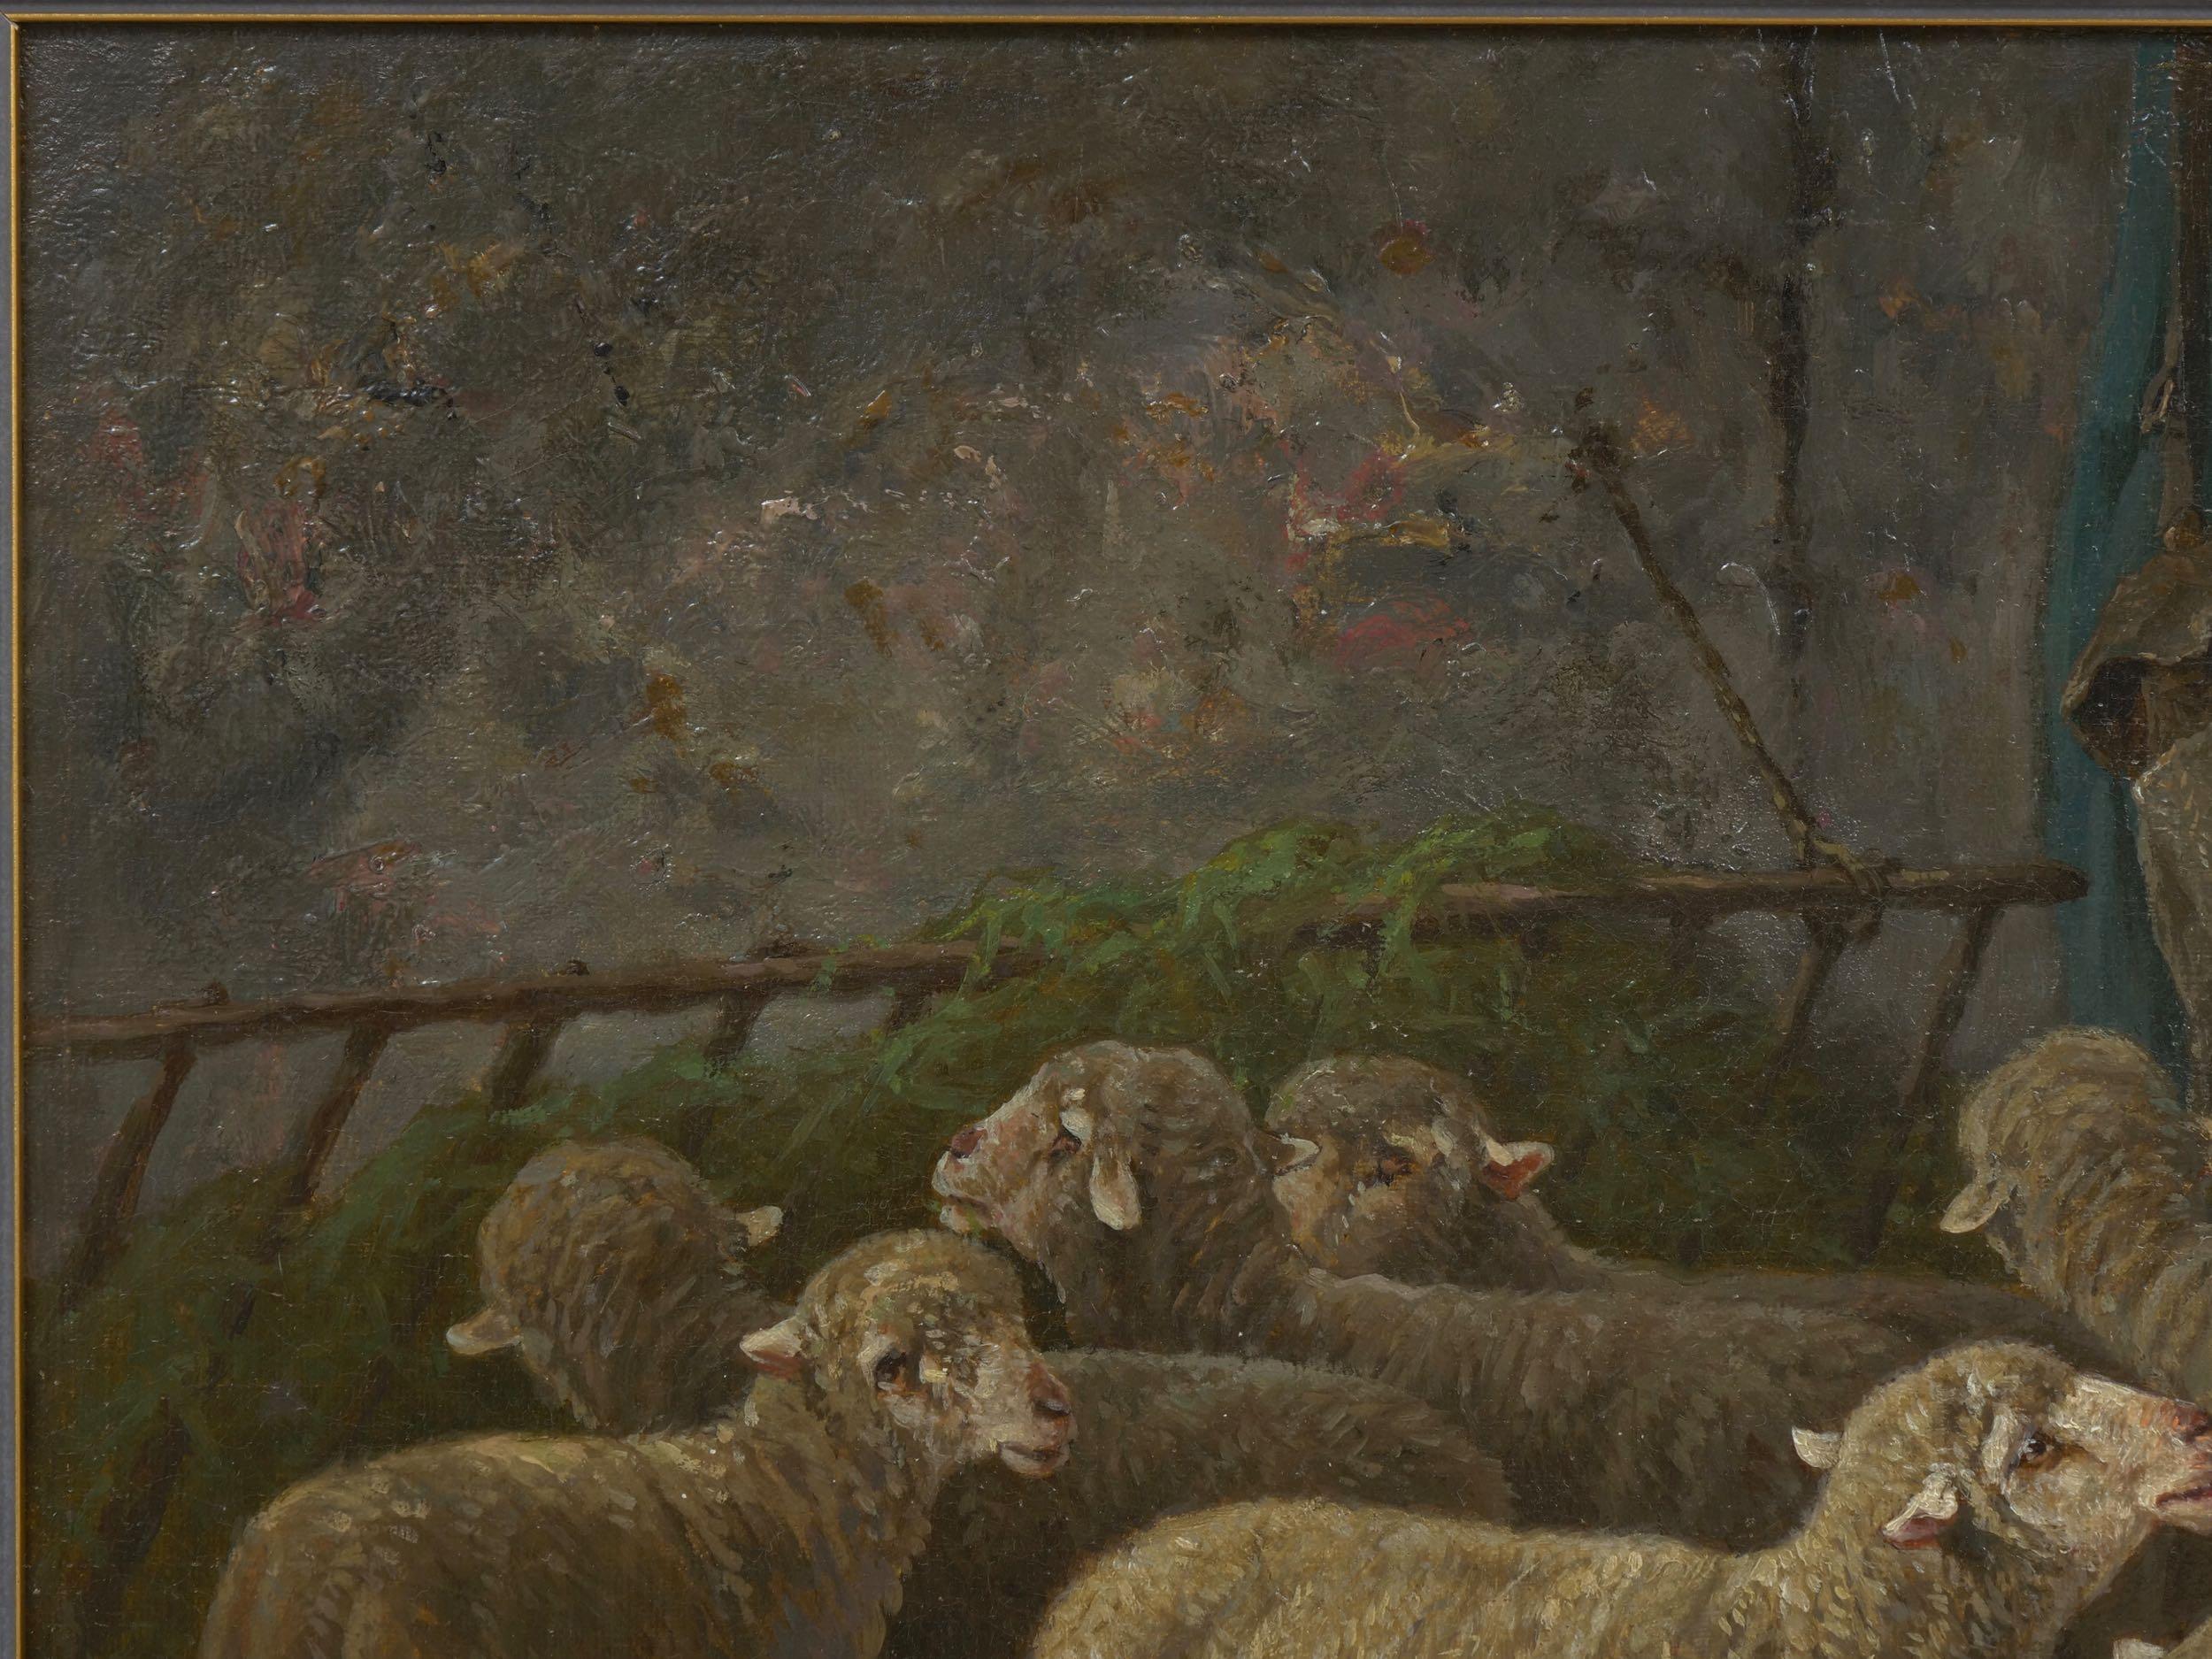 Barbizon School “Sheep Inside a Barn” French Barbizon Painting by Charles-Ferdinand Ceramano